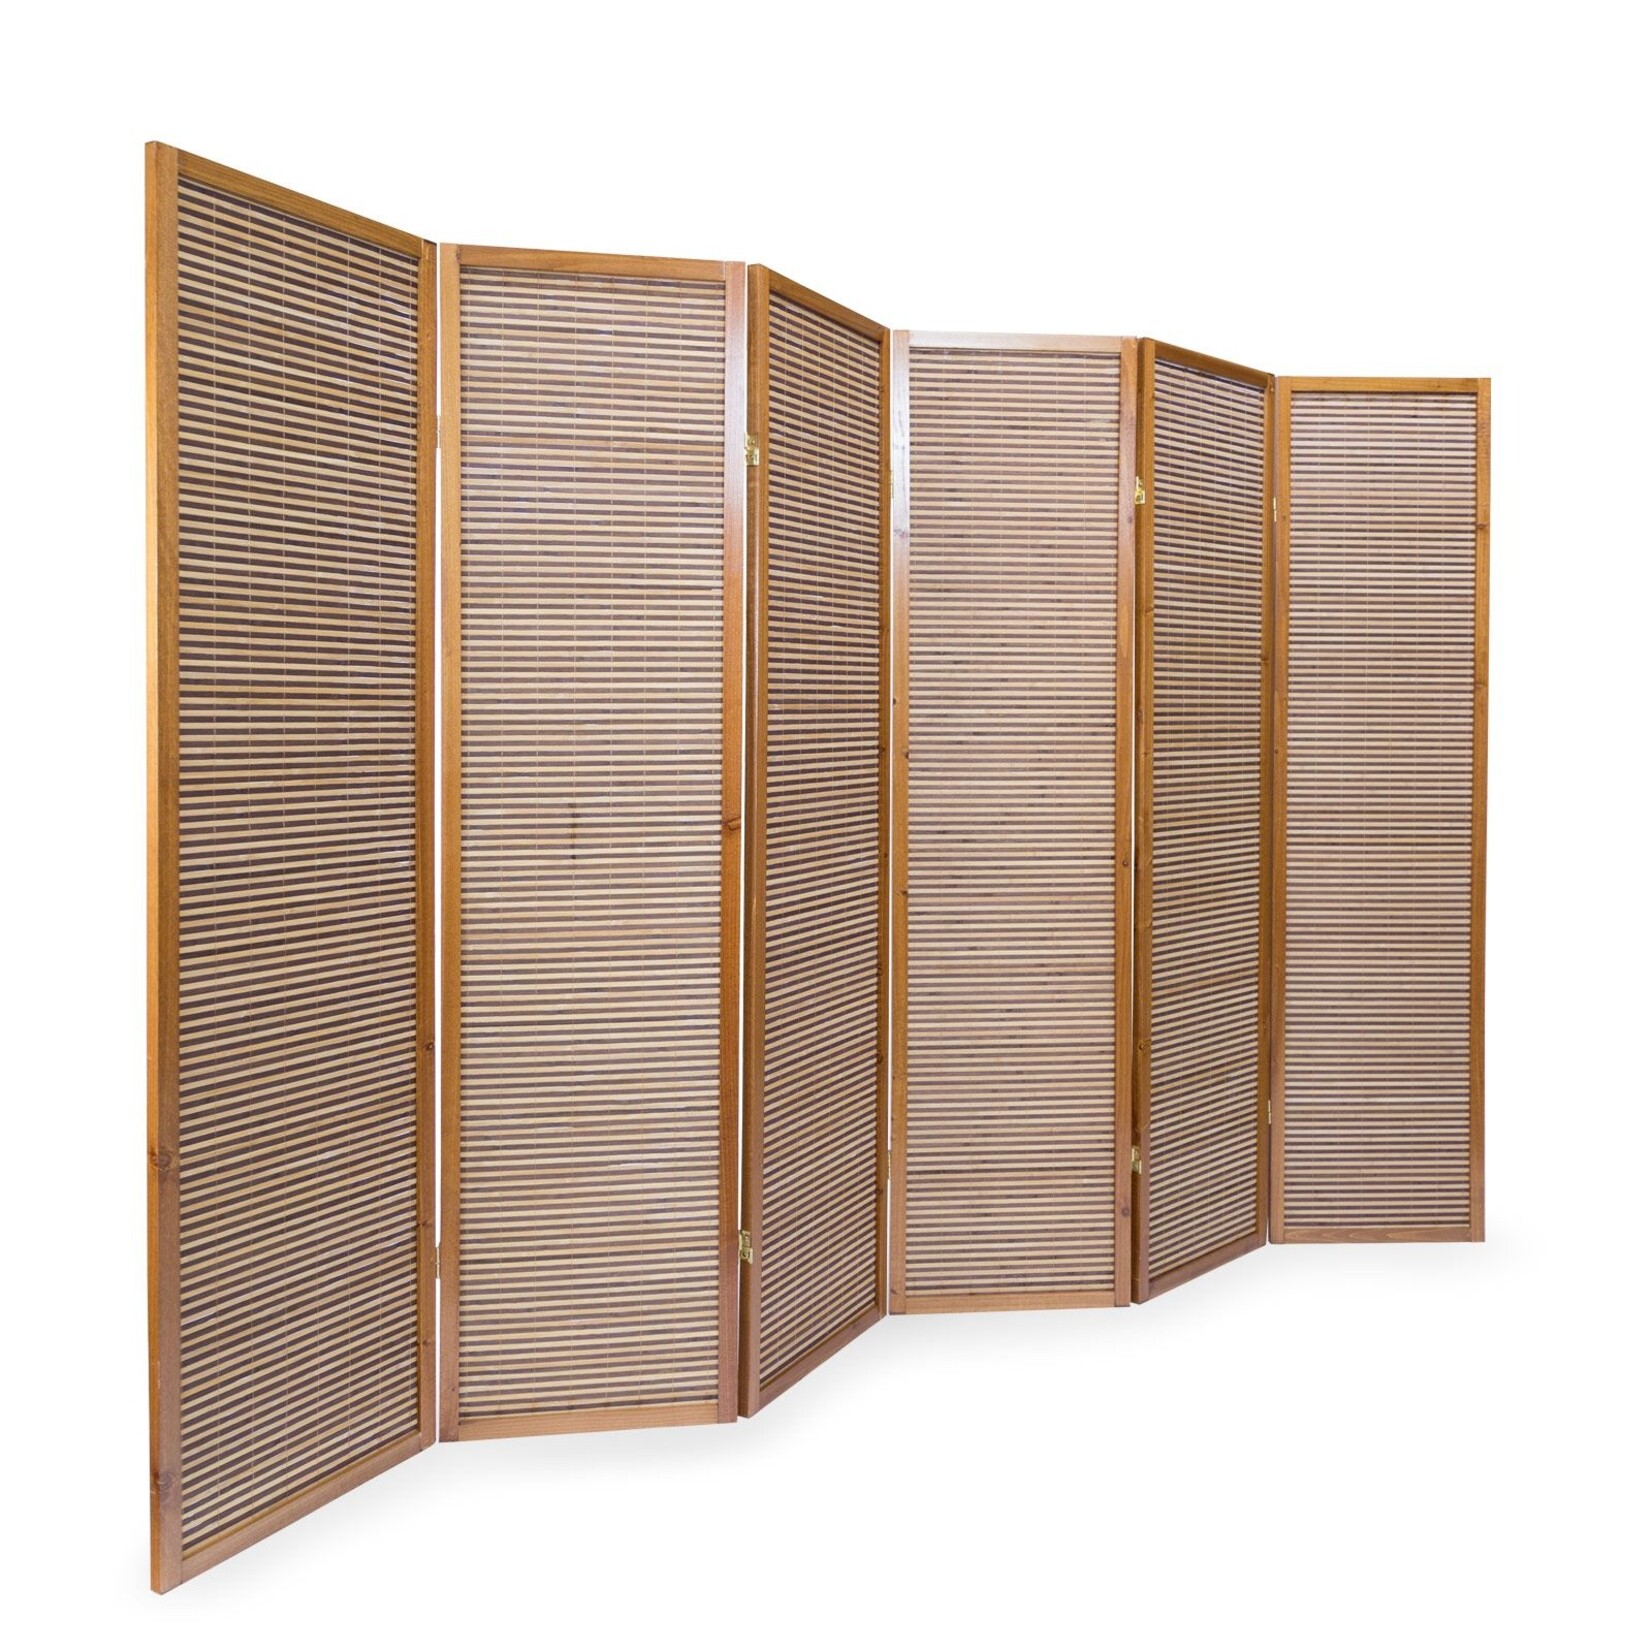 Kamerscherm scheidingswand hout en bamboe 6 delig